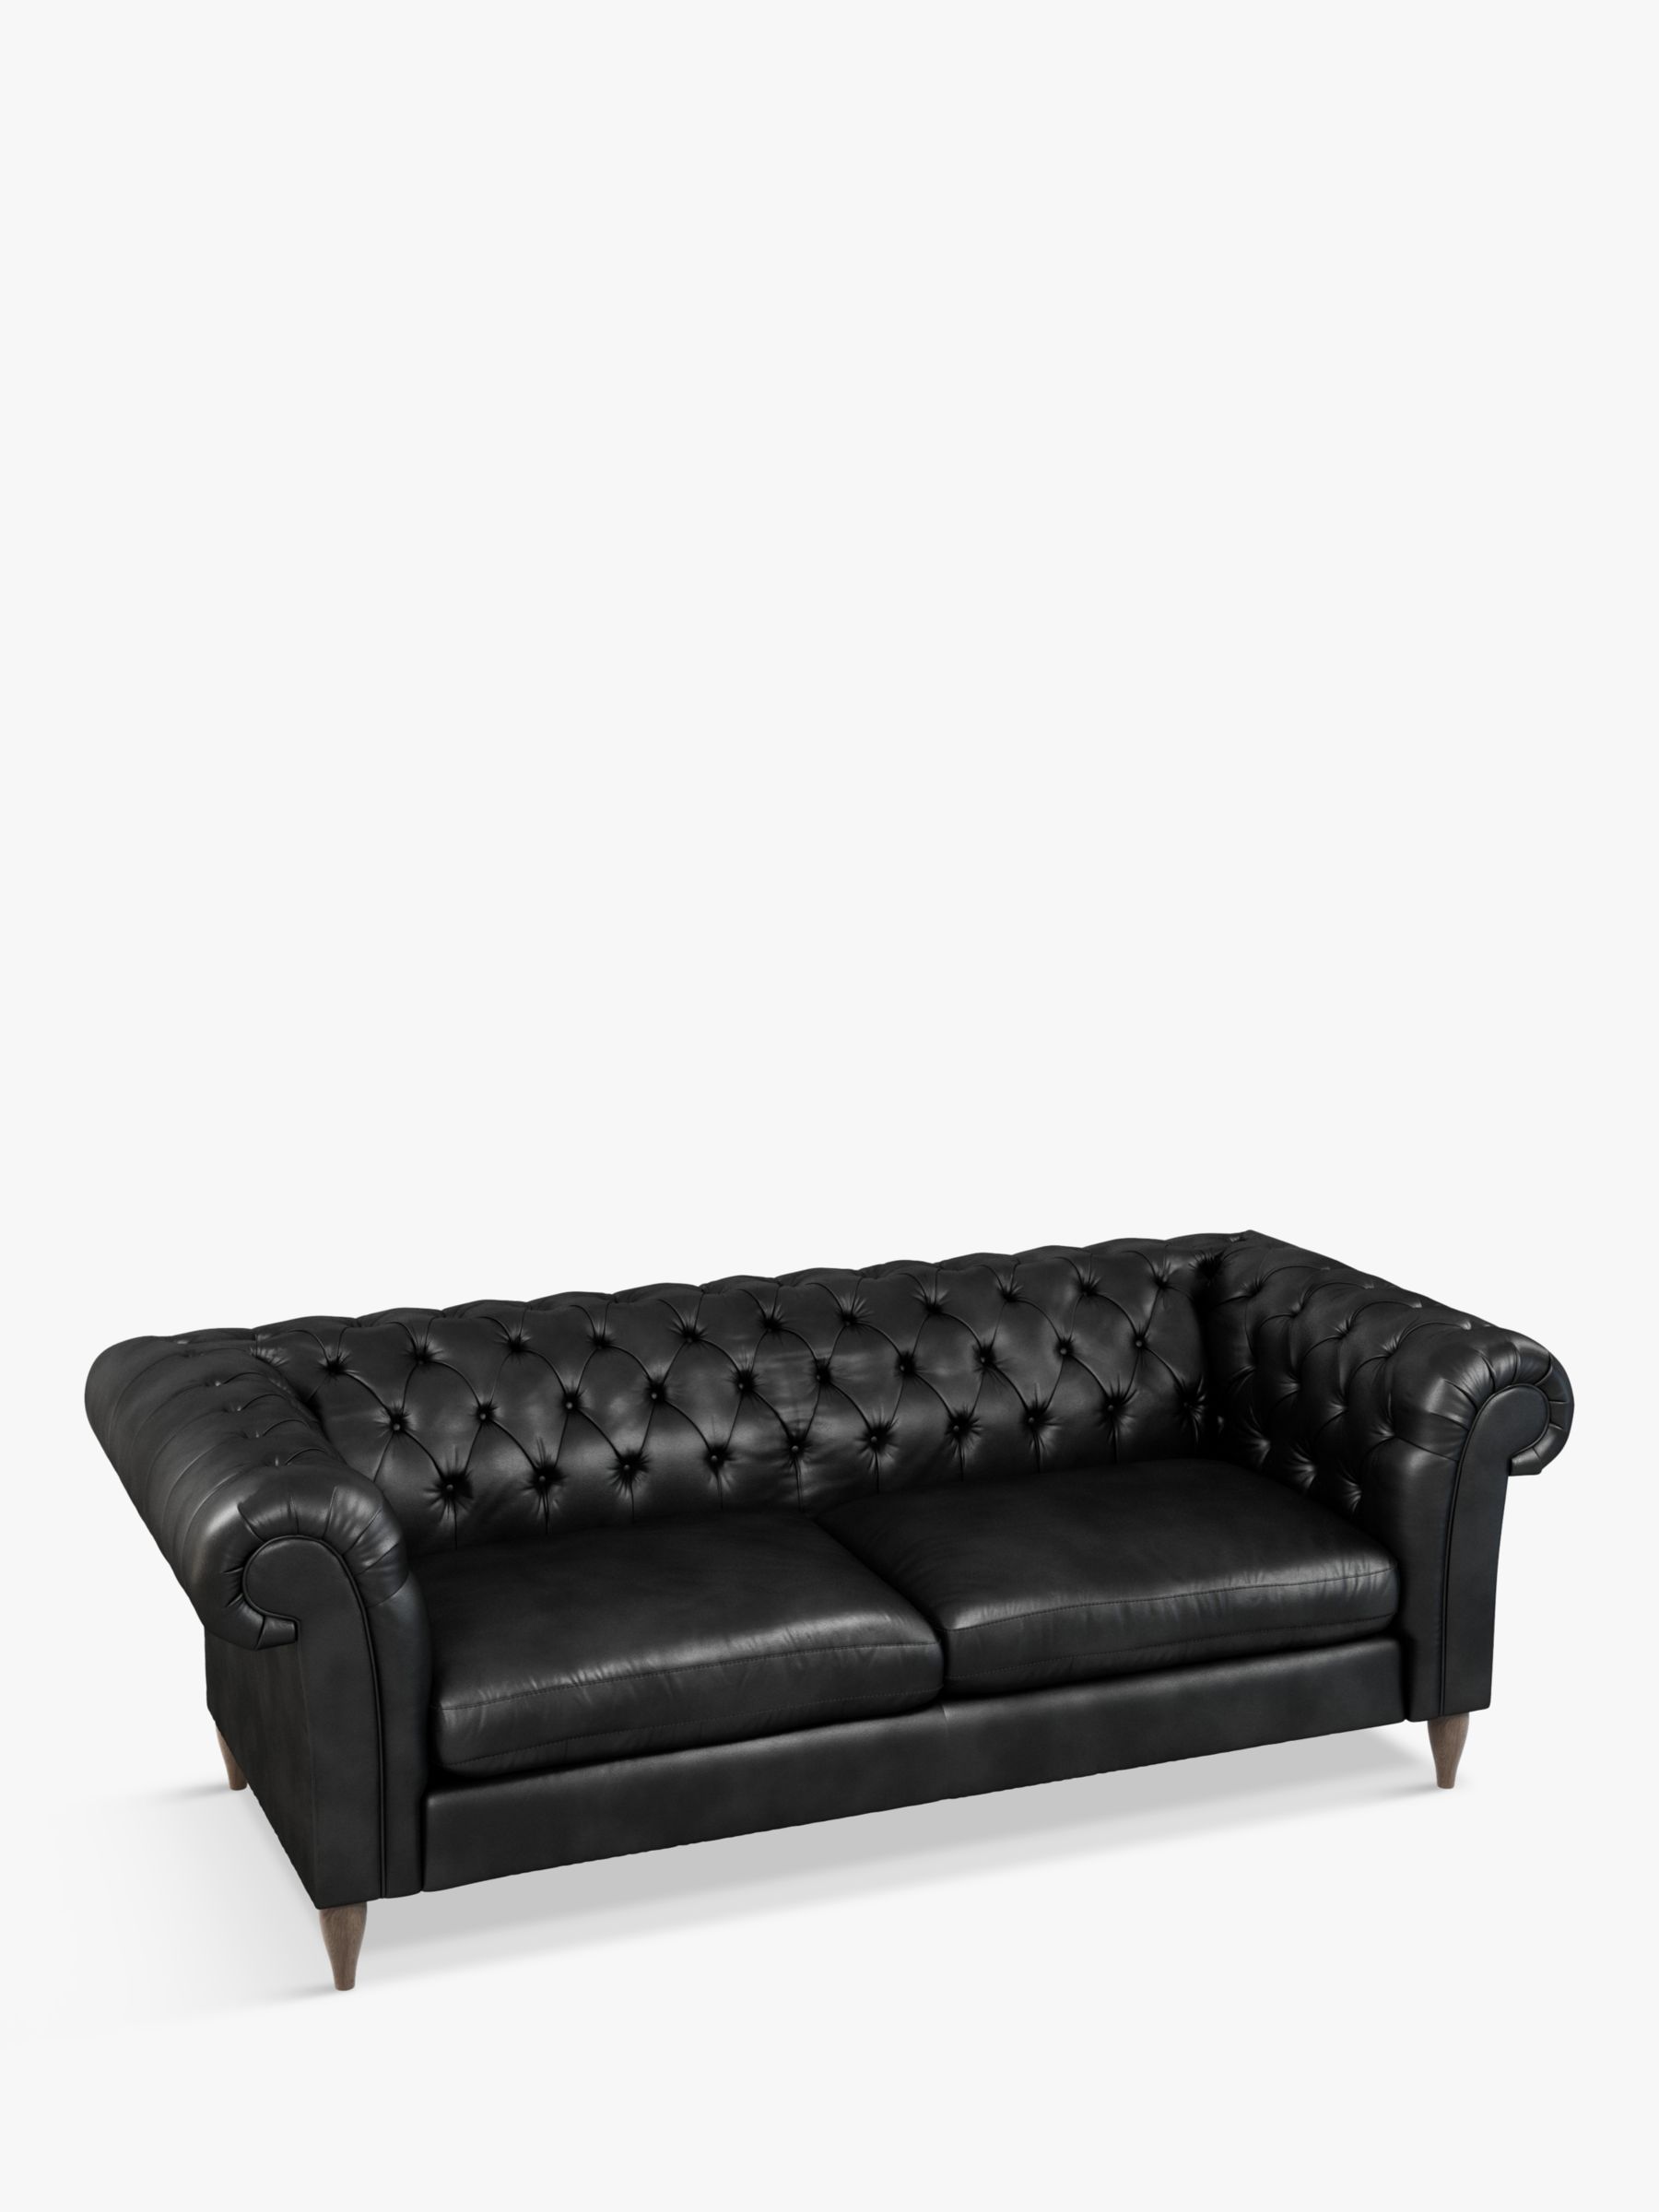 Cromwell Range, John Lewis Cromwell Chesterfield Grand 4 Seater Leather Sofa, Dark Leg, Contempo Black